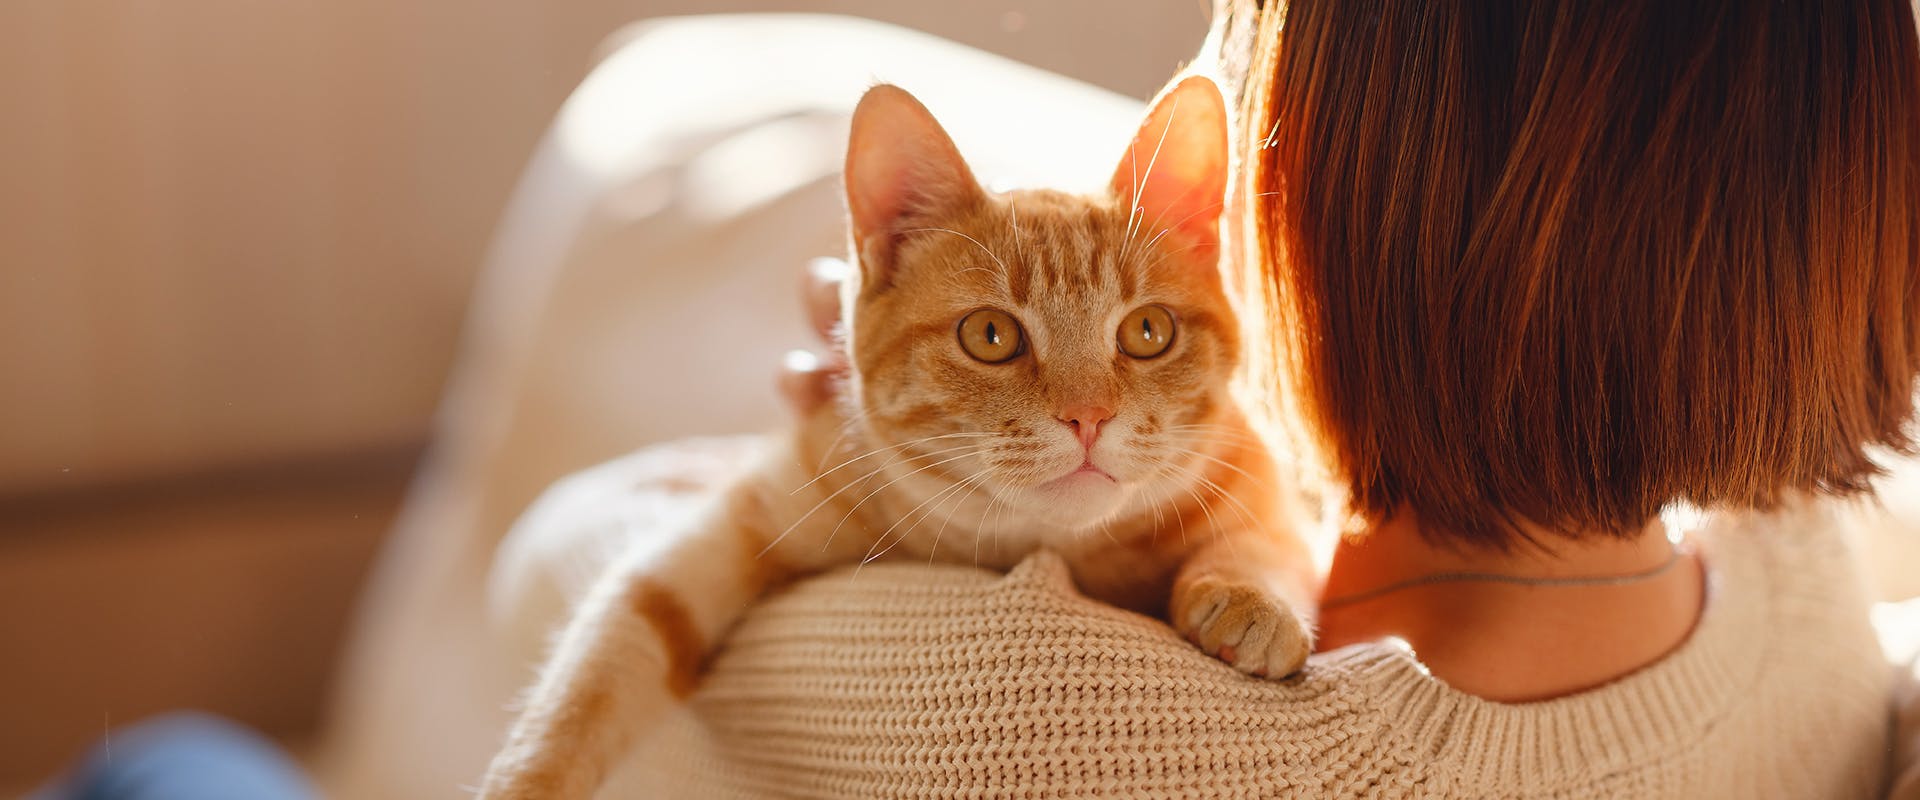 A woman cuddling an orange cat